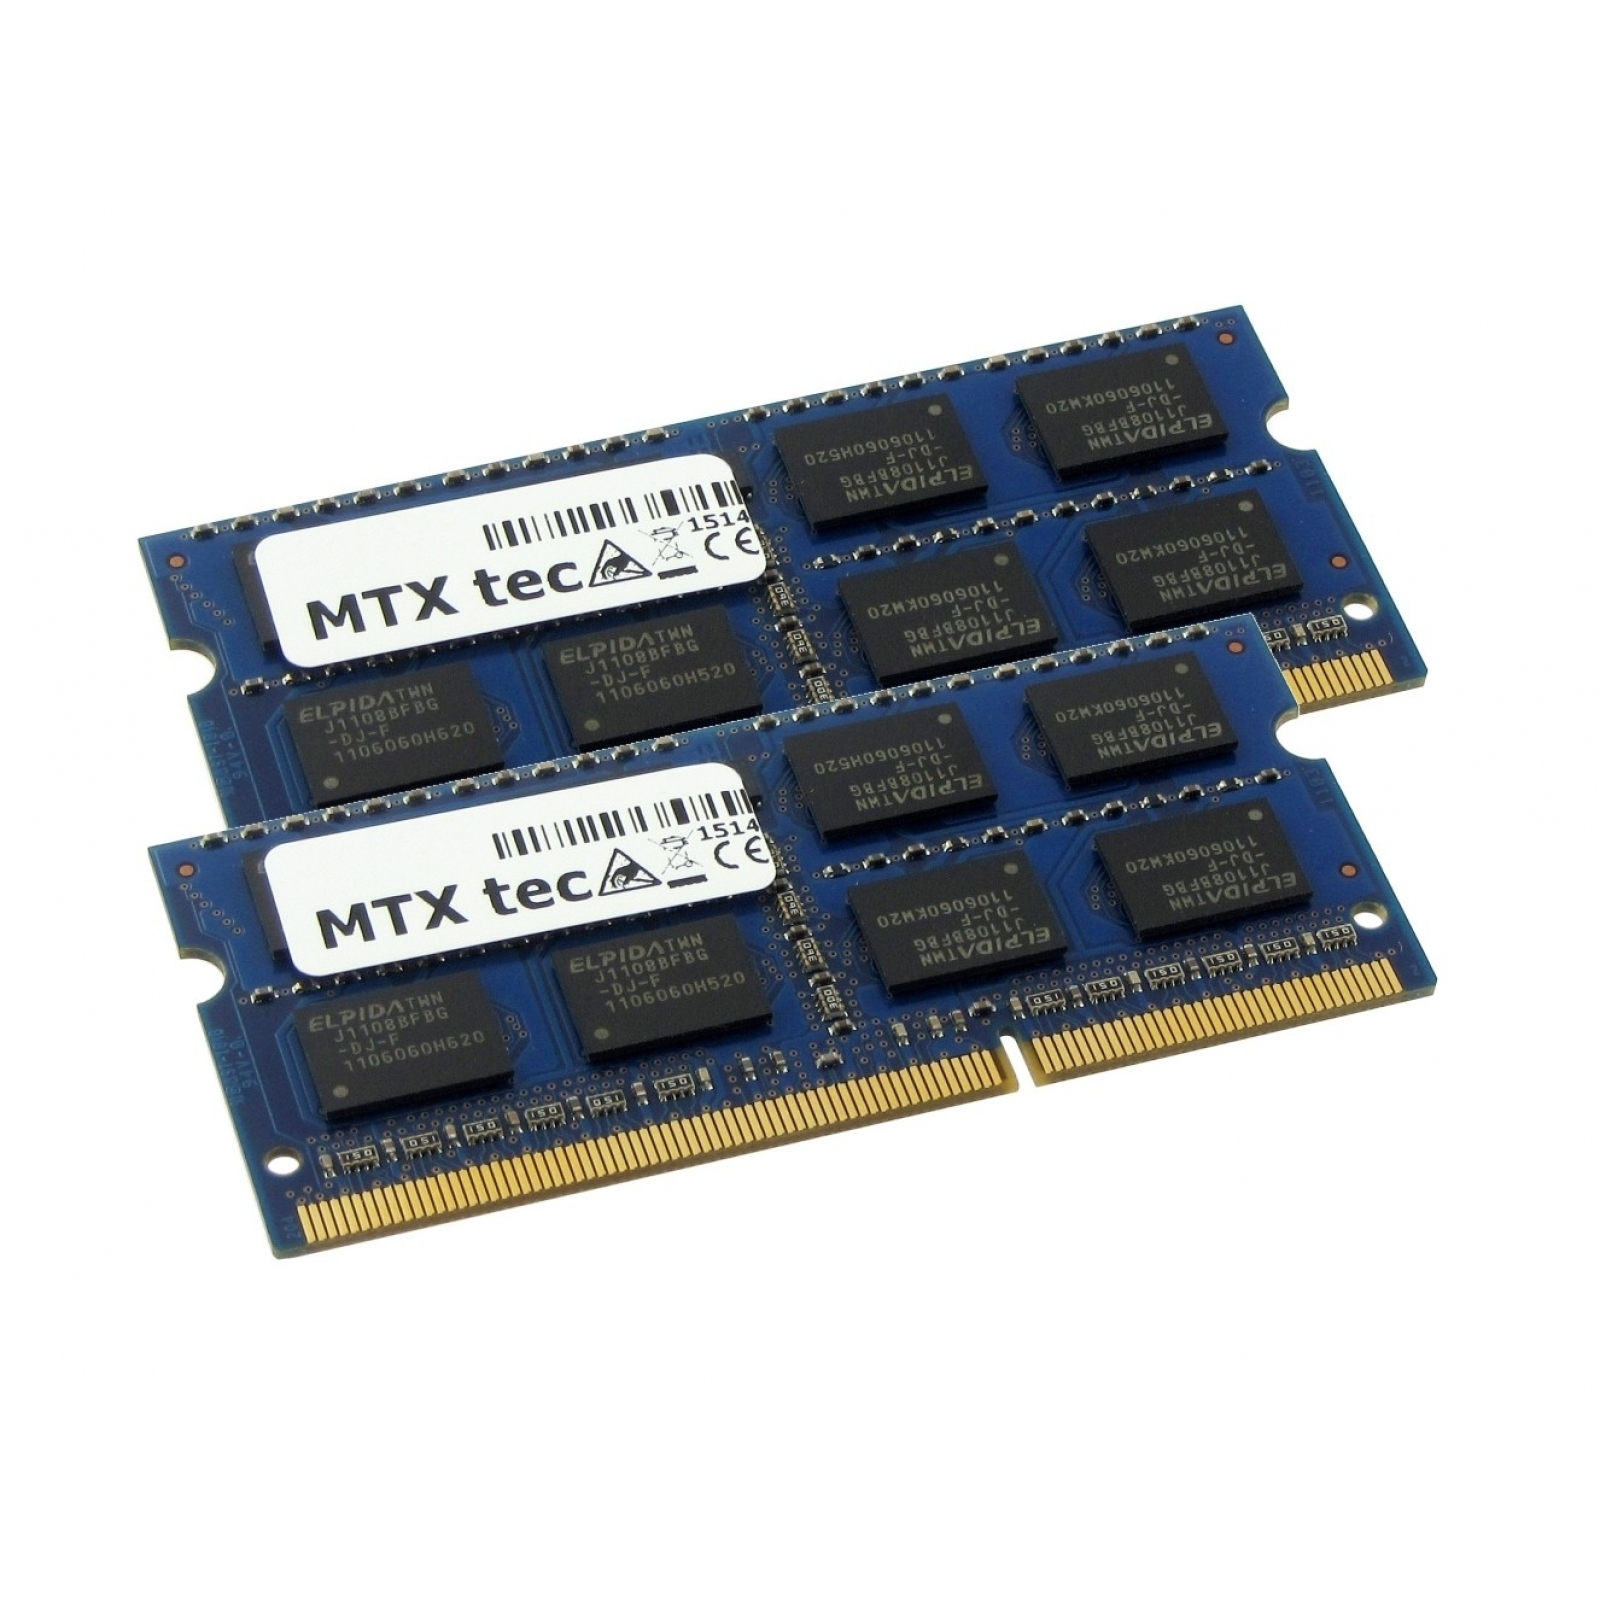 4 DDR3 2x PC3-10600, RAM MTXTEC 204 Kit DDR3 Laptop-Speicher 8GB SODIMM 1333MHz Notebook-Speicher GB 4GB Pin DDR3